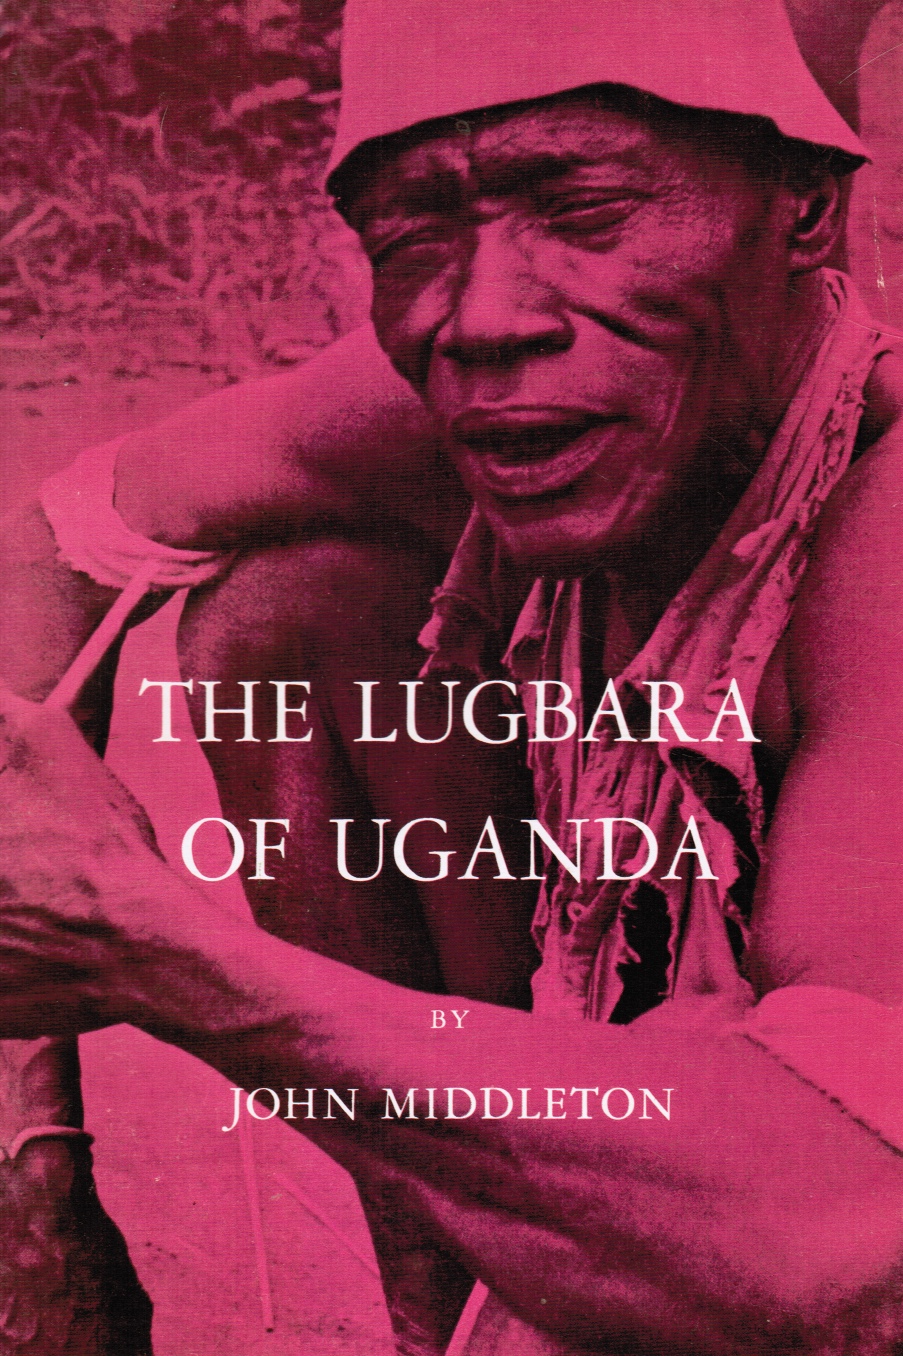 MIDDLETON, JOHN - The Lugbara of Uganda